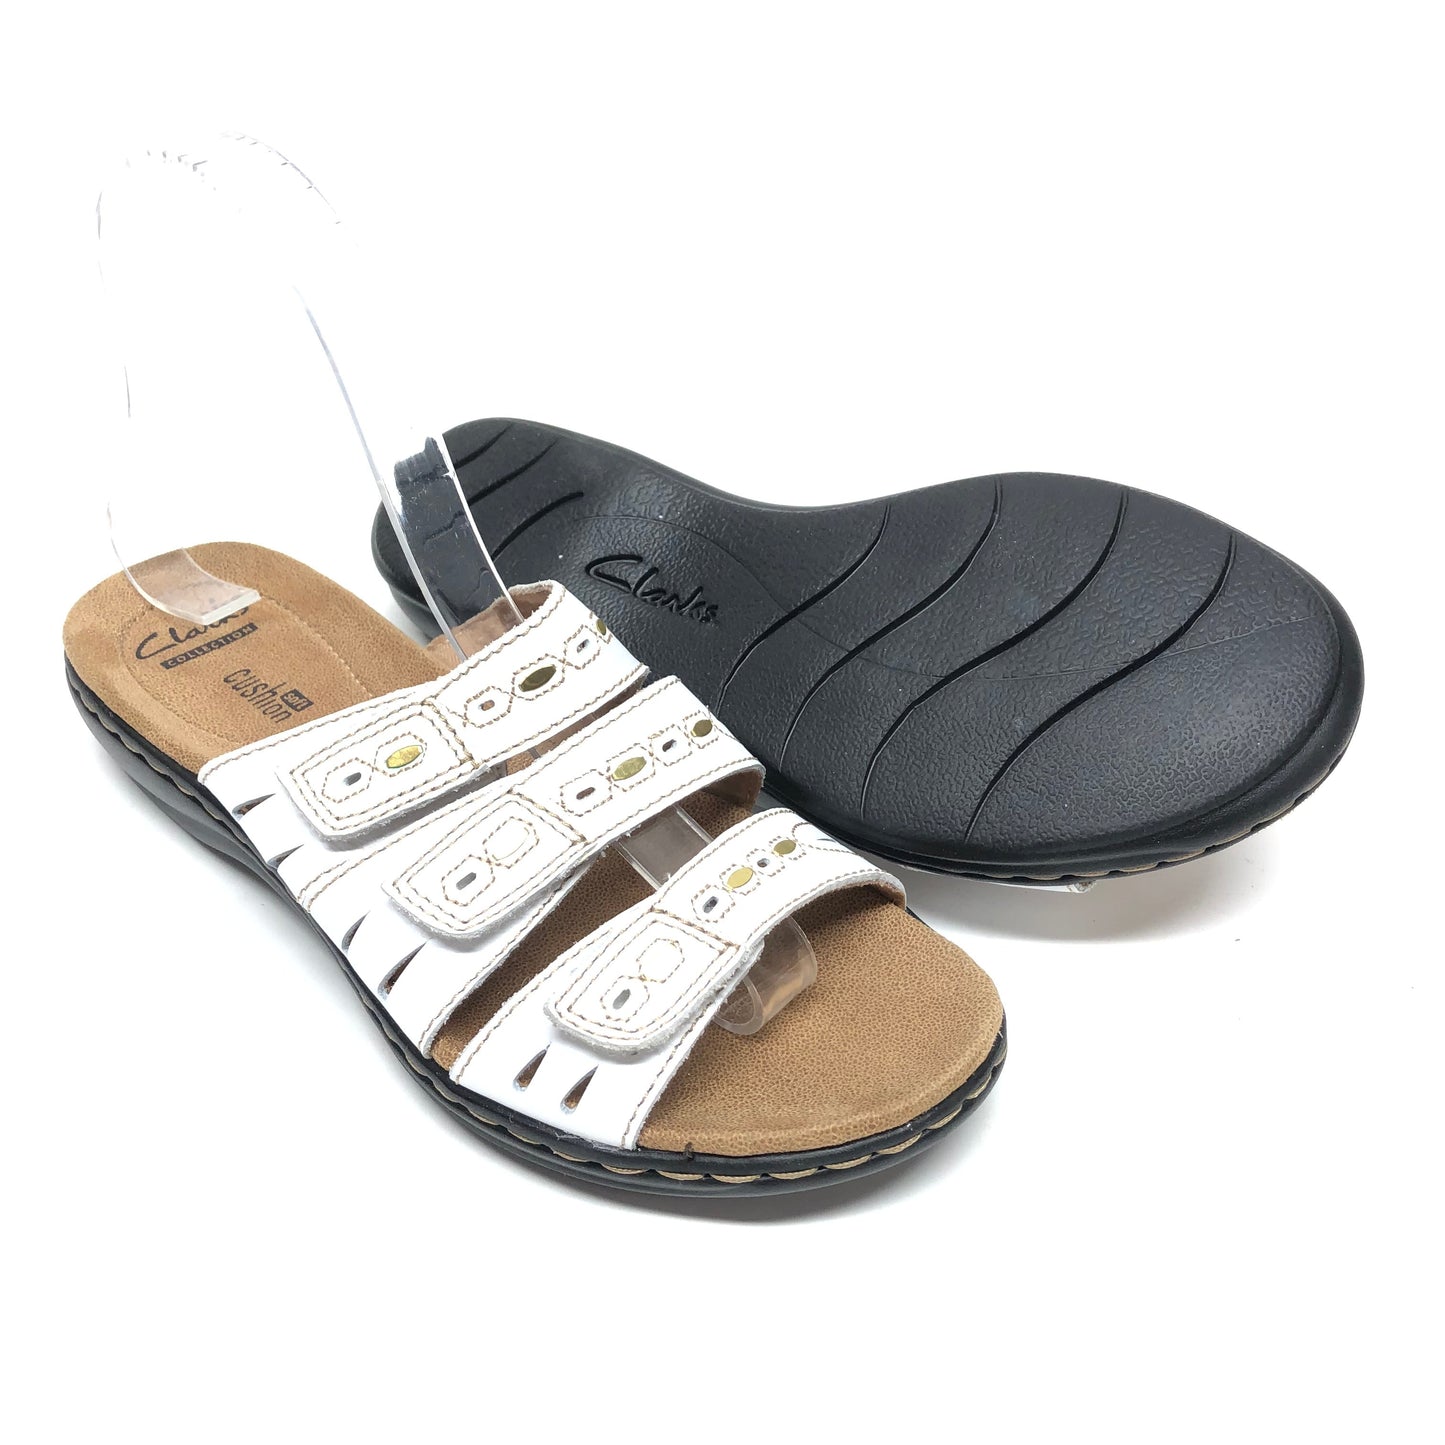 White Sandals Flats Clarks, Size 6.5